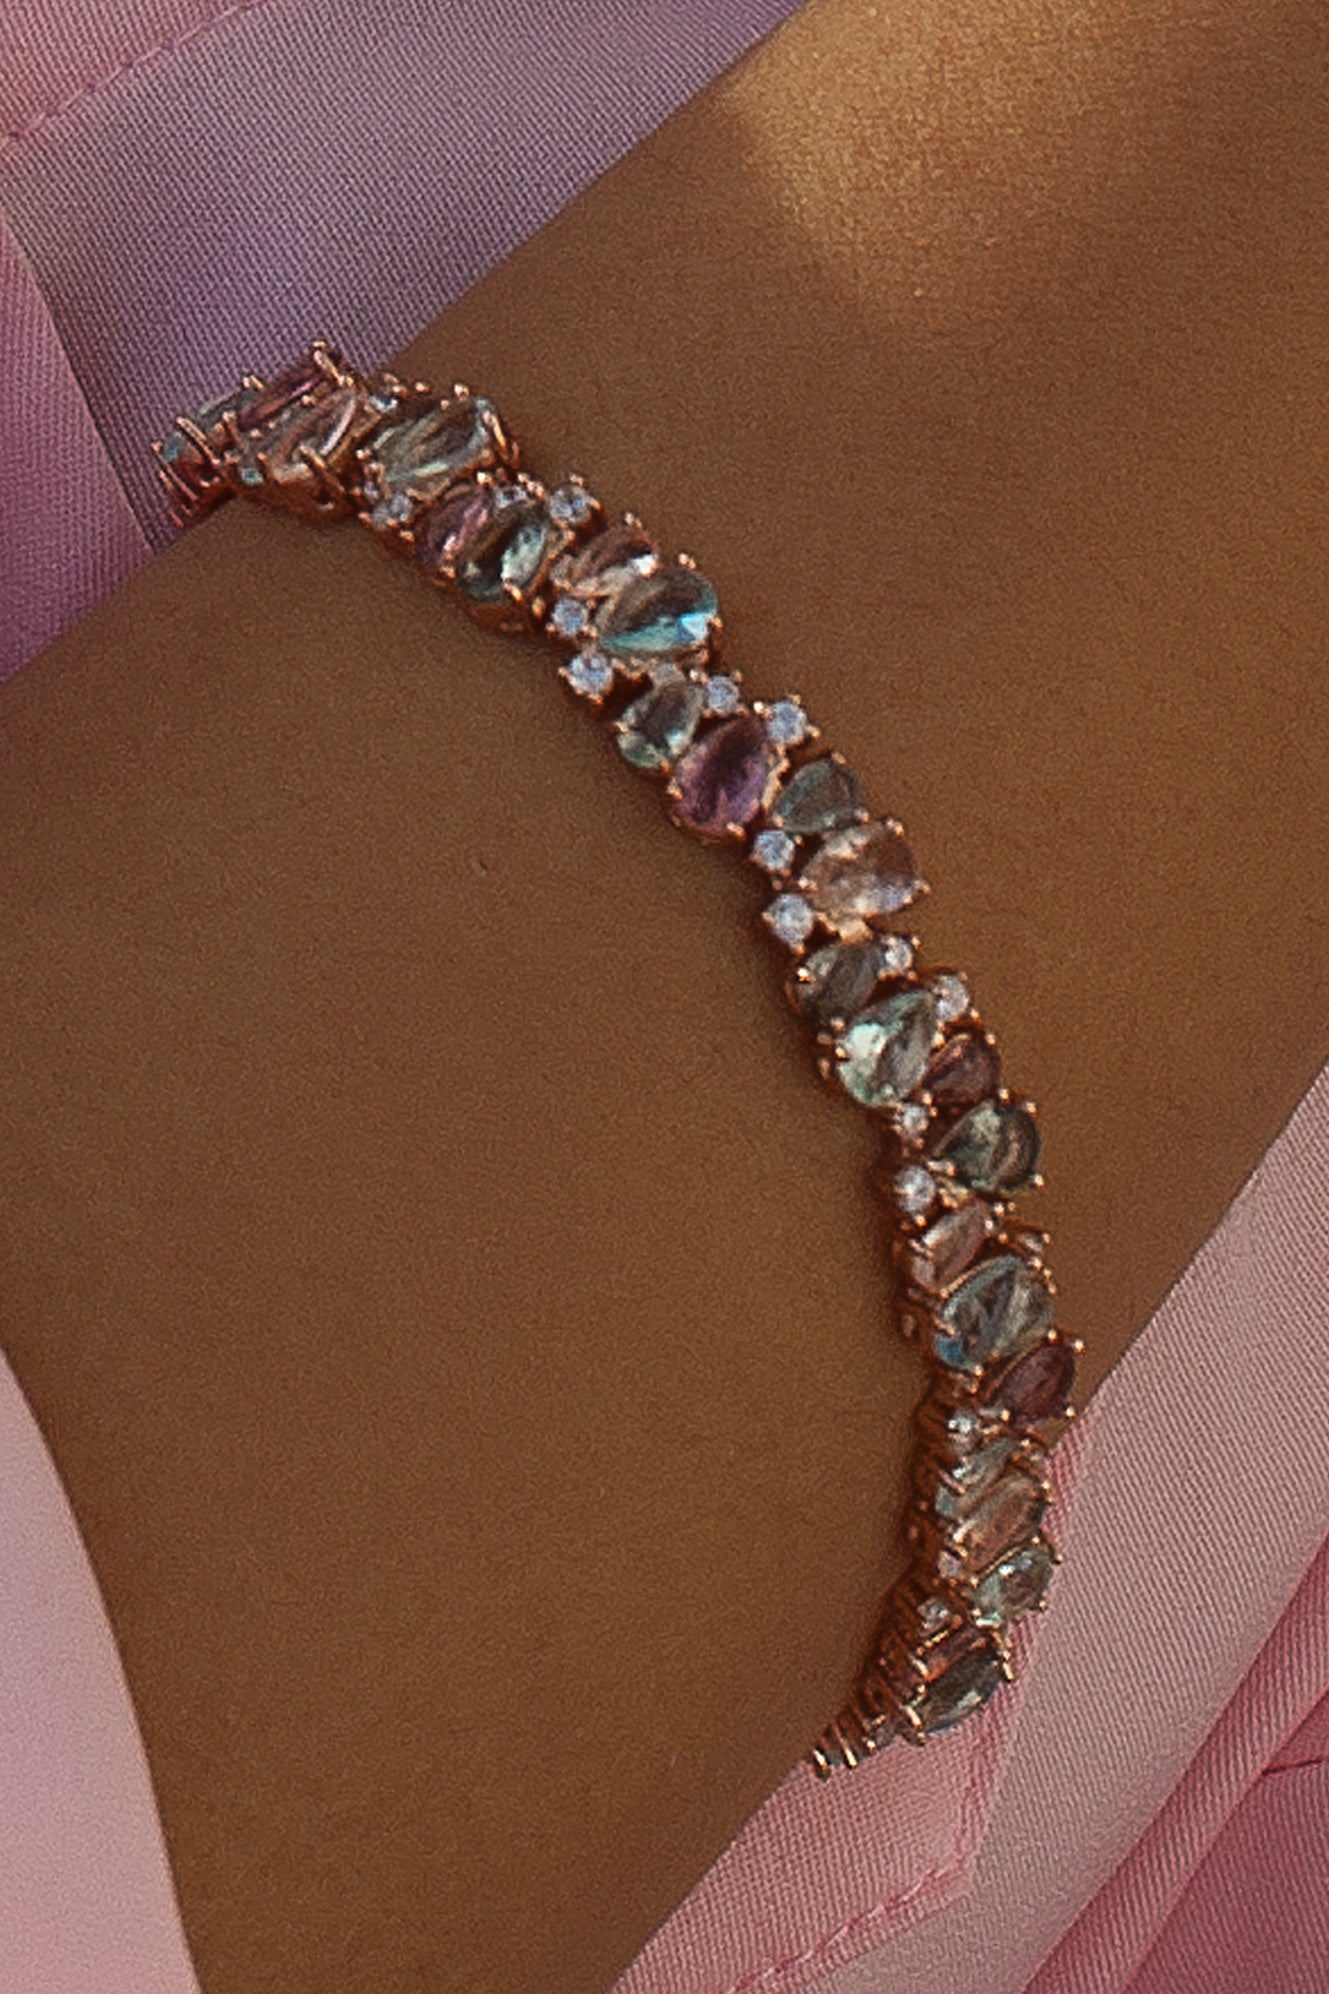 Bracelet - Bracelets with colored stones in warm tones